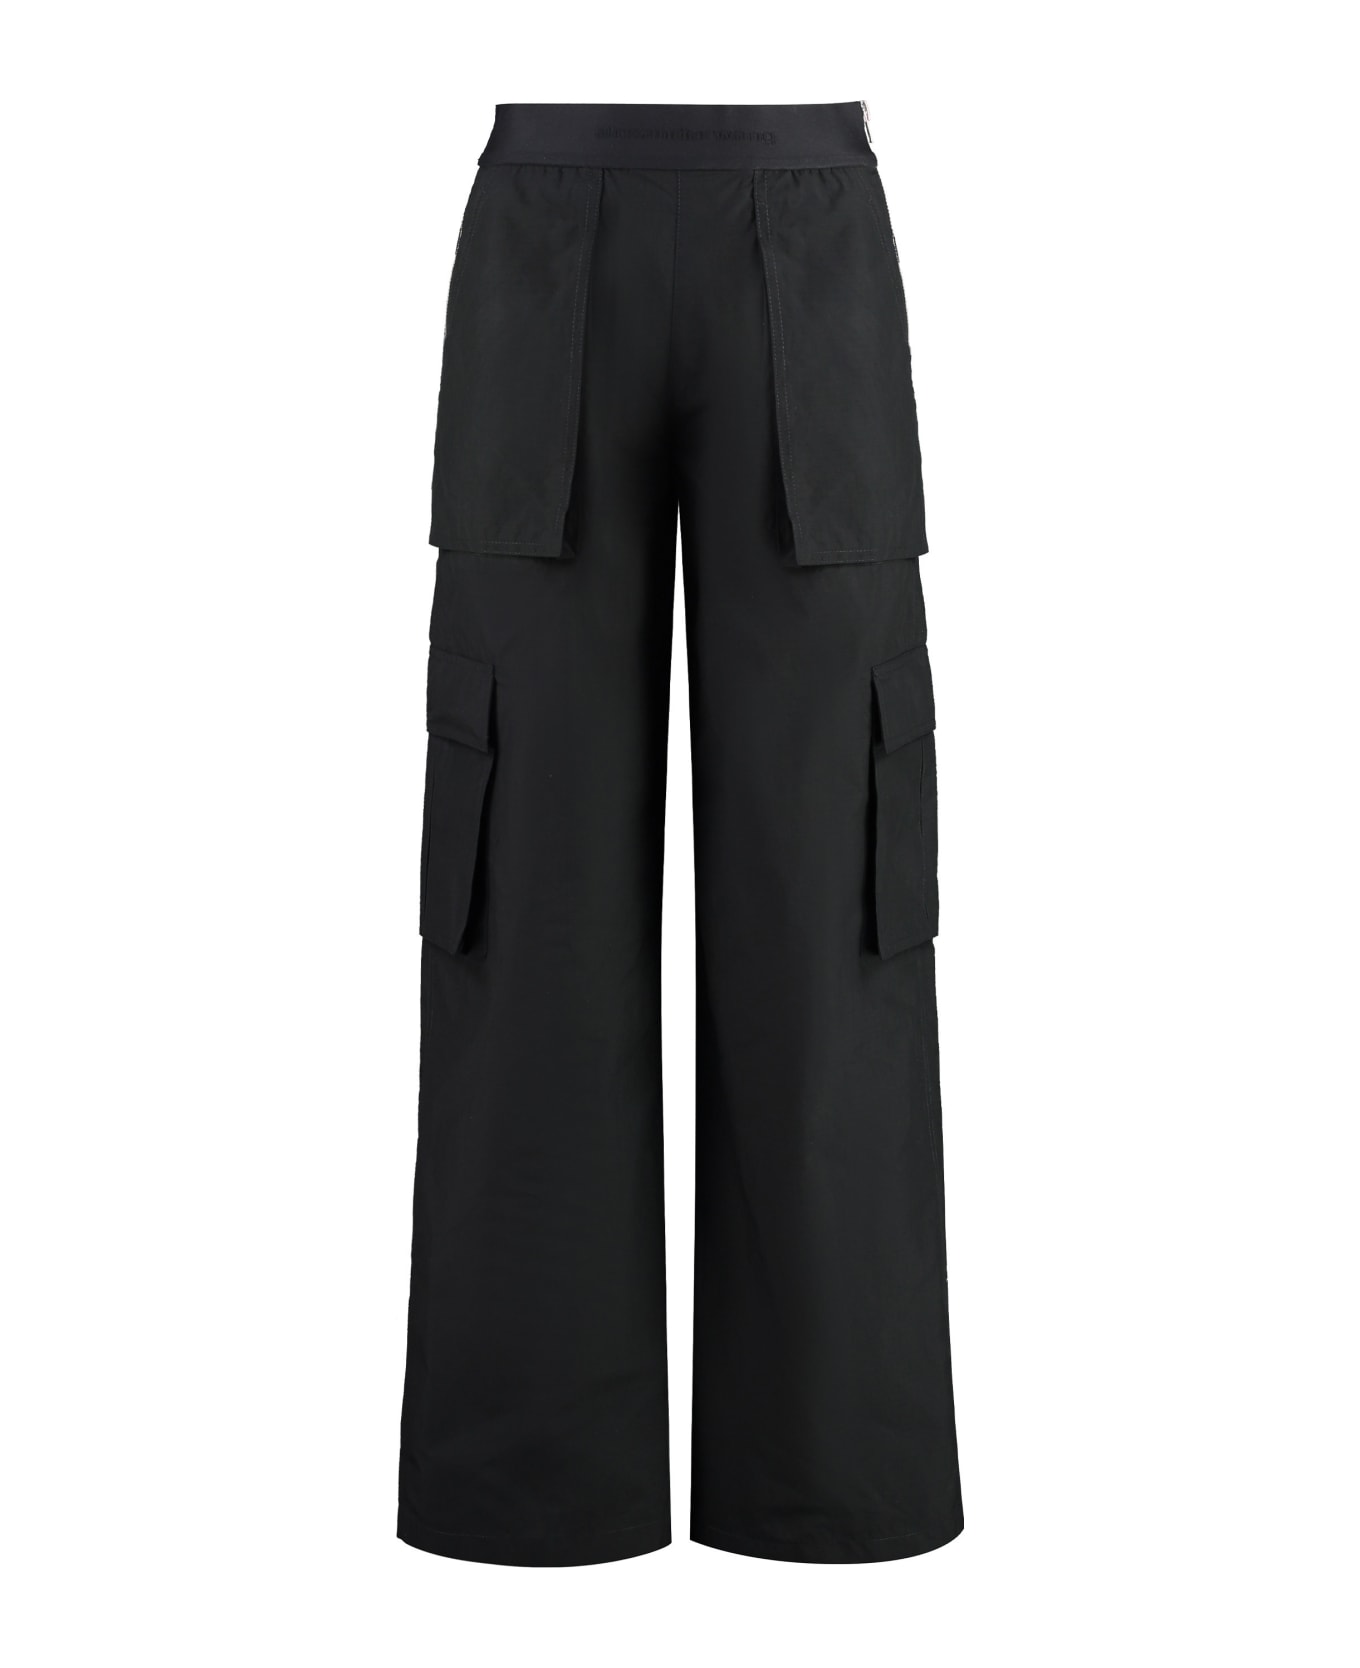 Alexander Wang Technical-nylon Pants - black